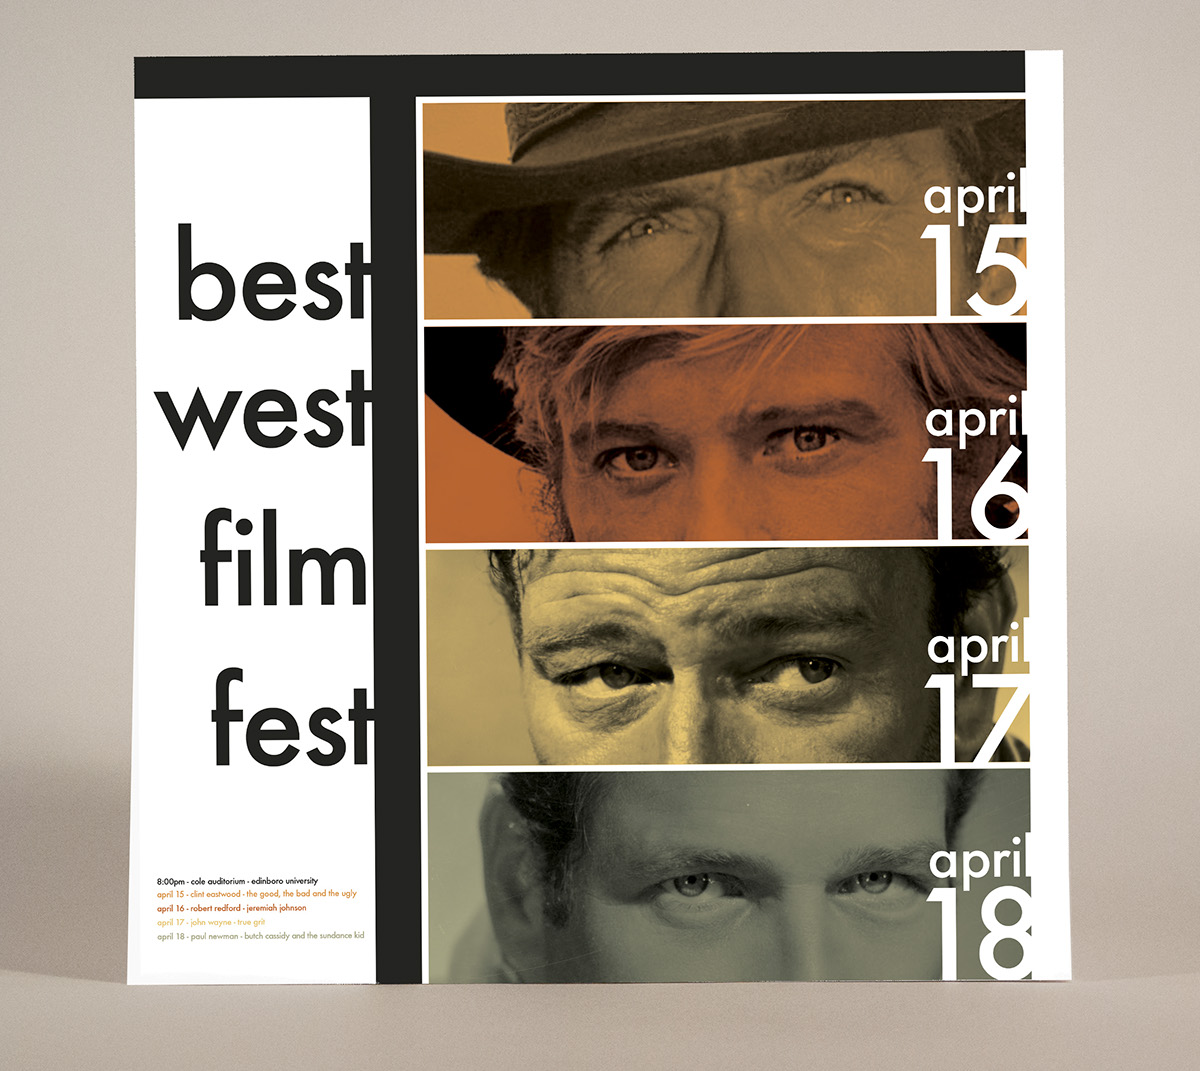 poster cowboy Clint Eastwood film fest robert redford modernist piet mondrian Appropriation Edinboro University western